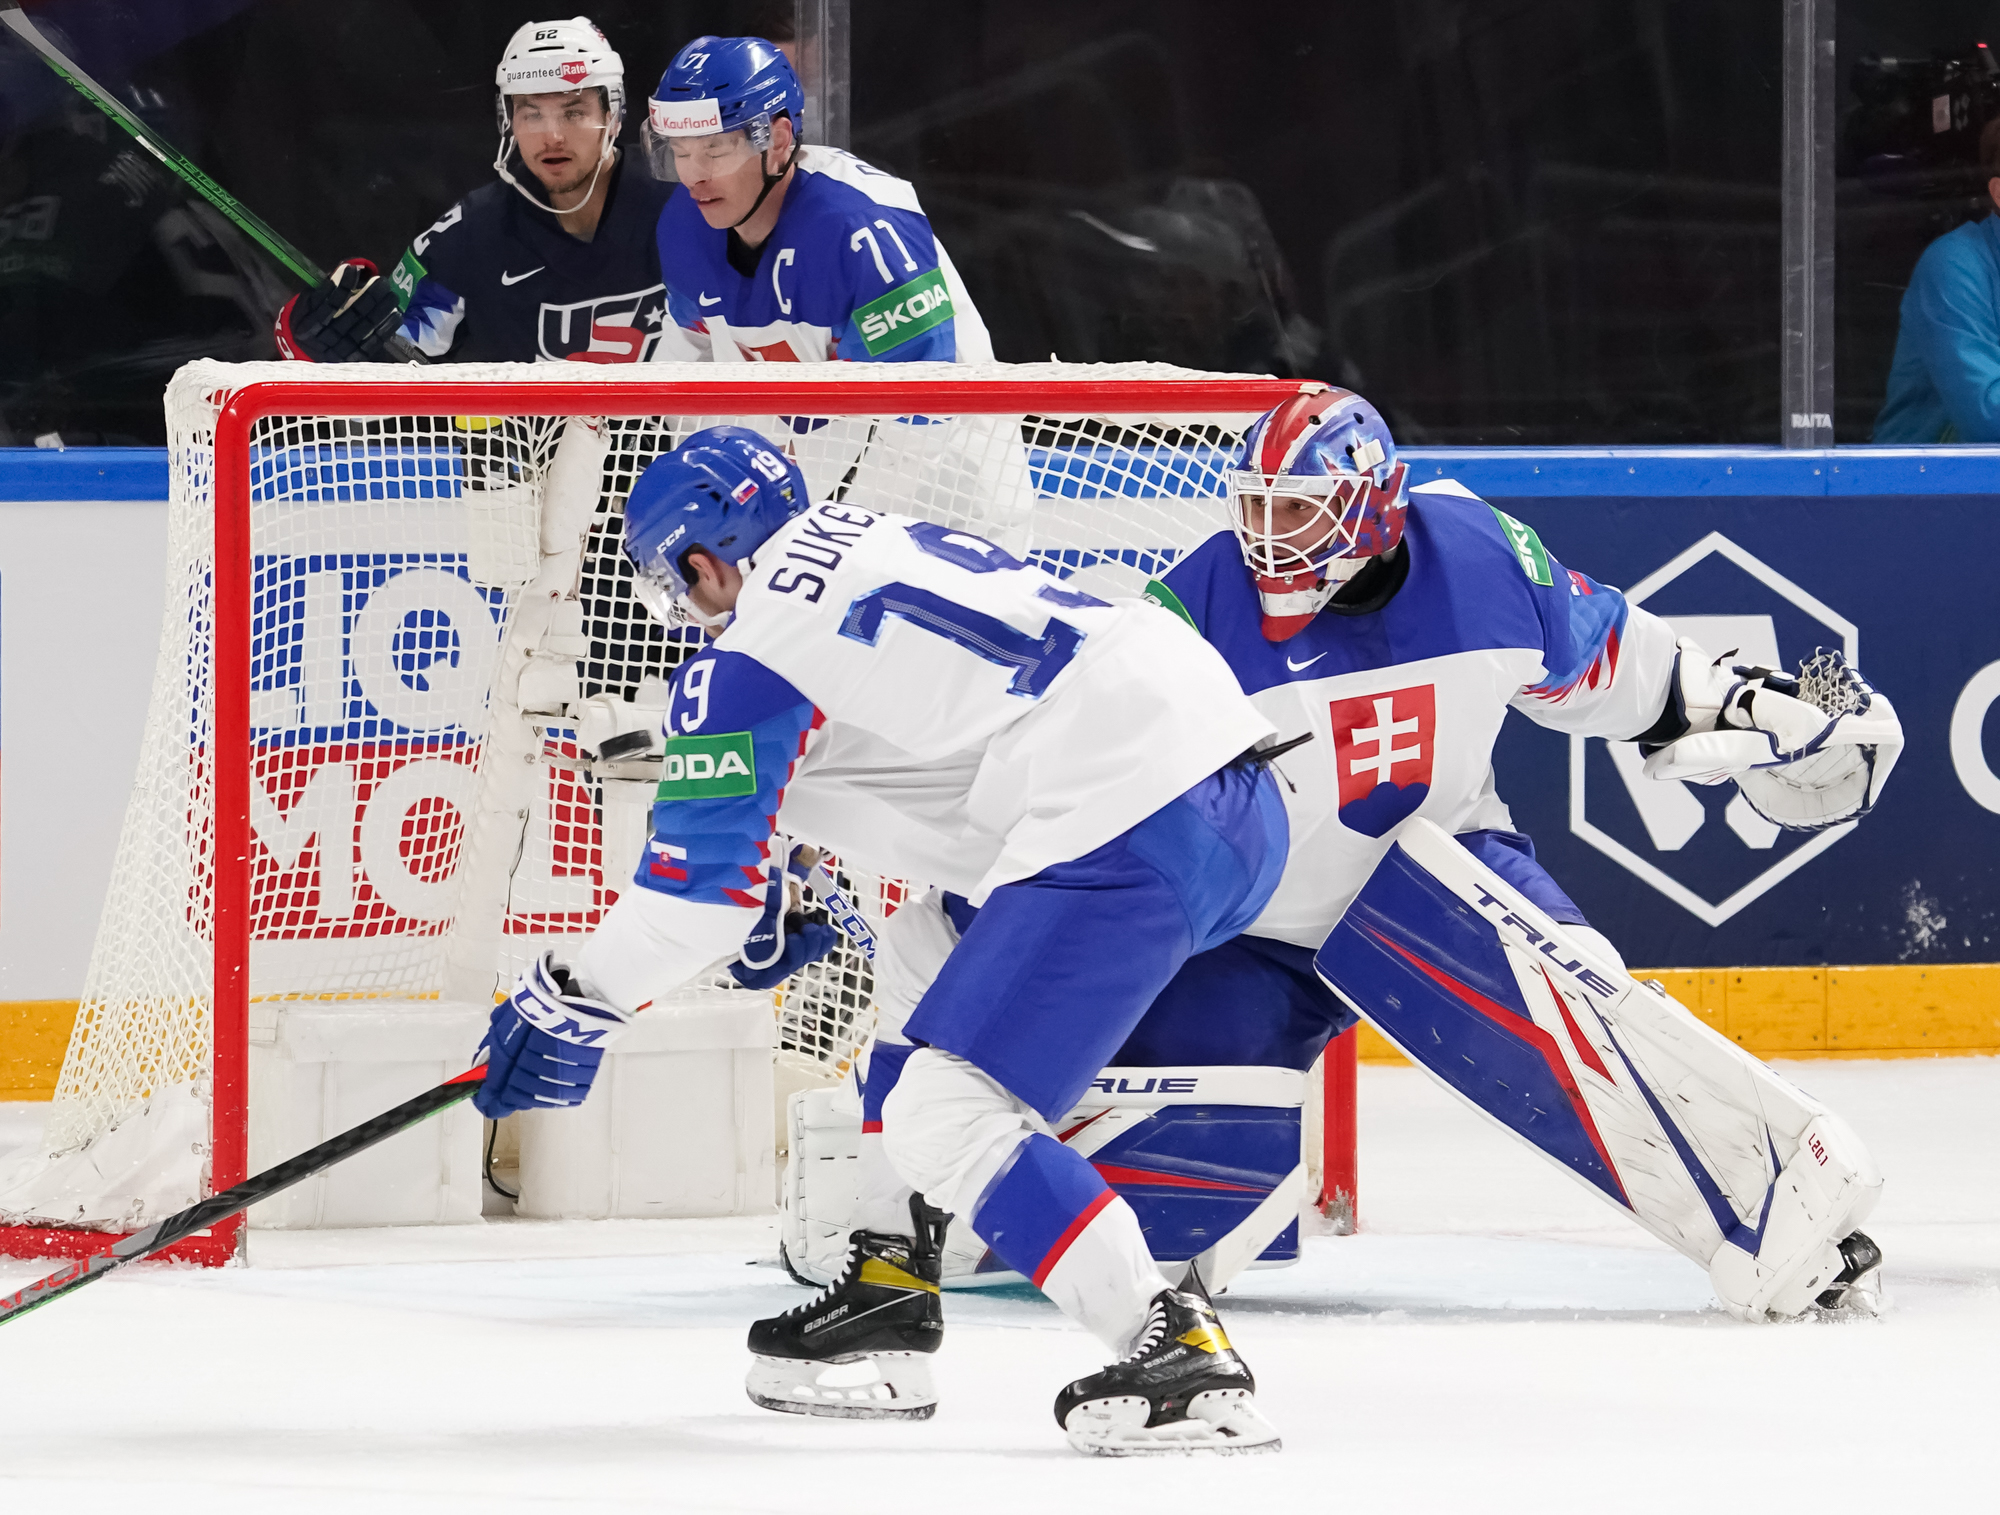 IIHF U.S. tops Slovakia to make semifinals